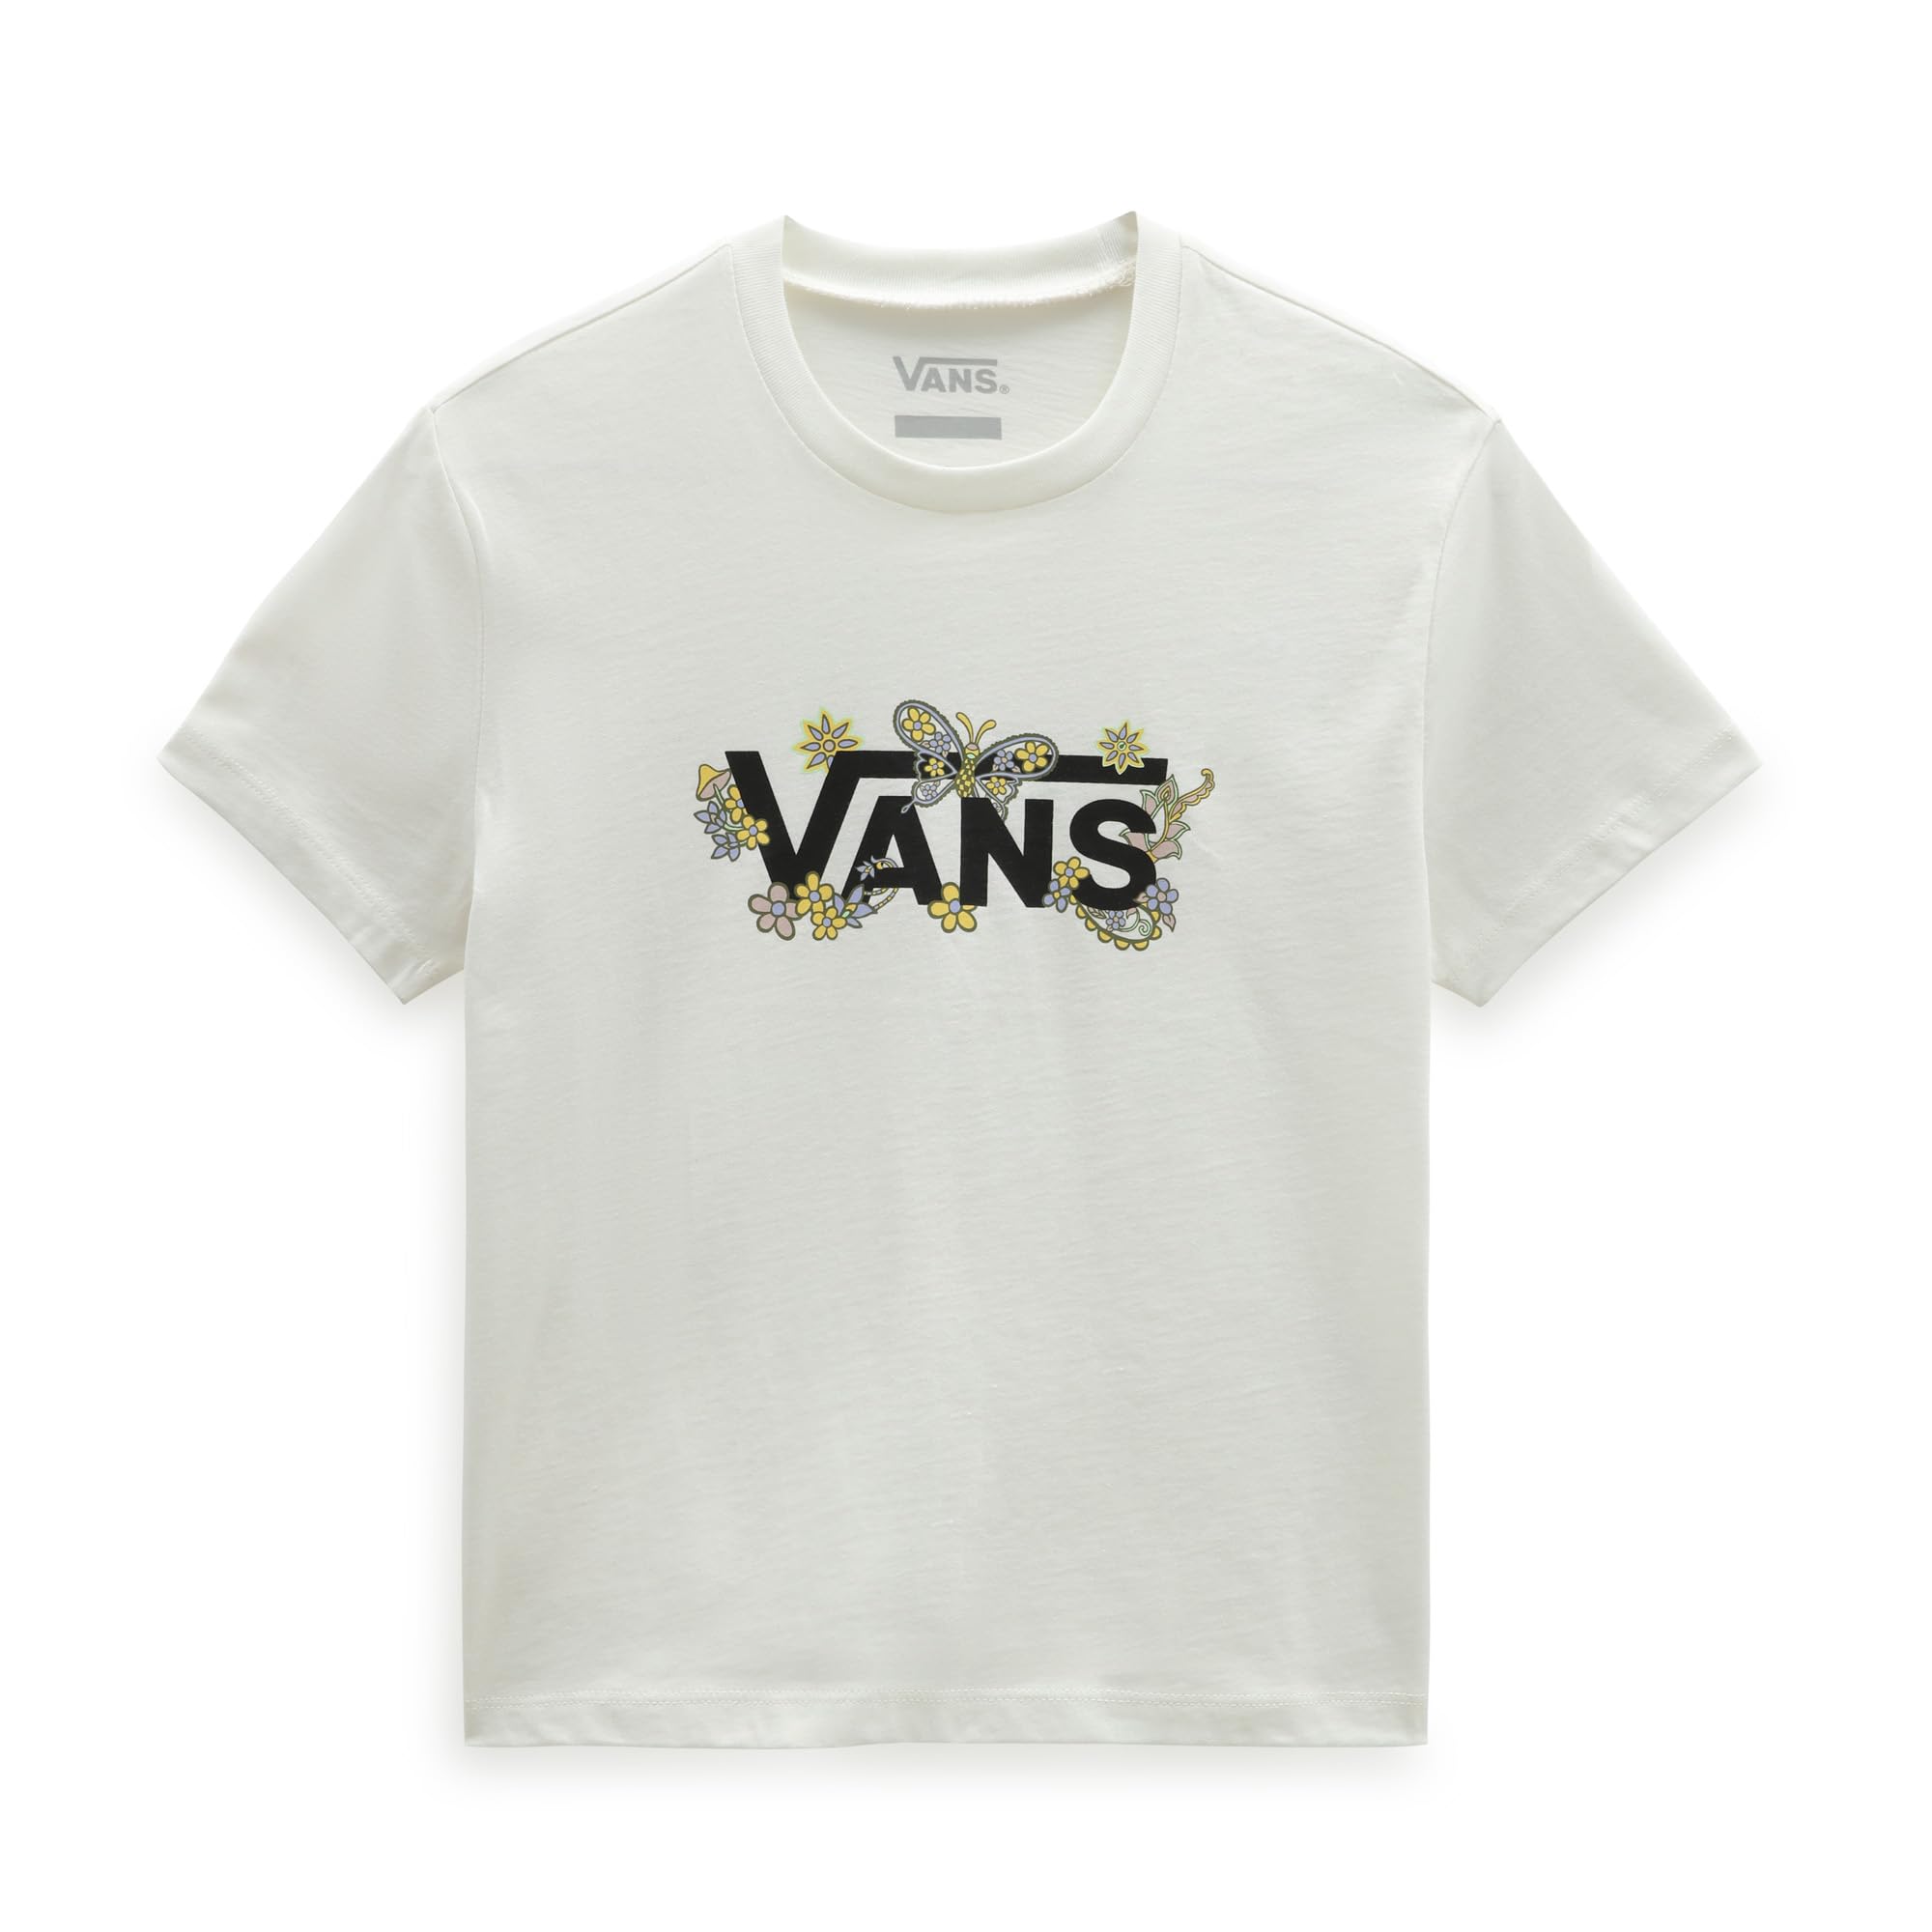 Exclusif Vans Trippy Floral Crew T-Shirt Fille OzLAn8Kjb à vendre